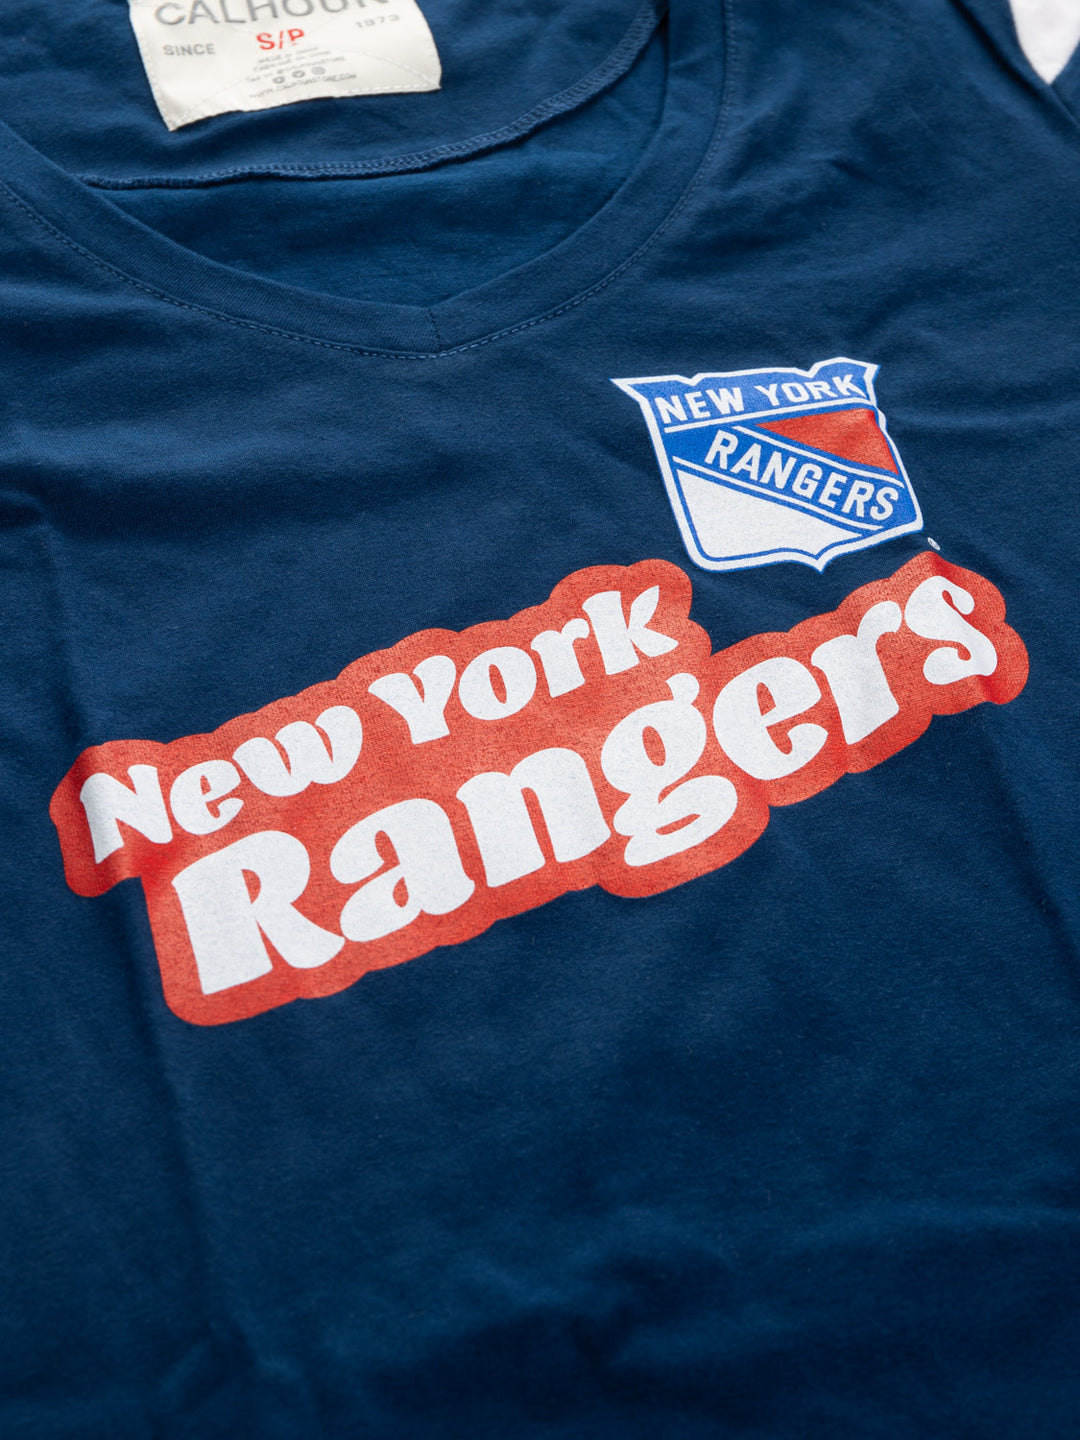 Official Licensed NHL Ladies' Retro Varsity Short Sleeve Vneck Tshirt--New York Rangers